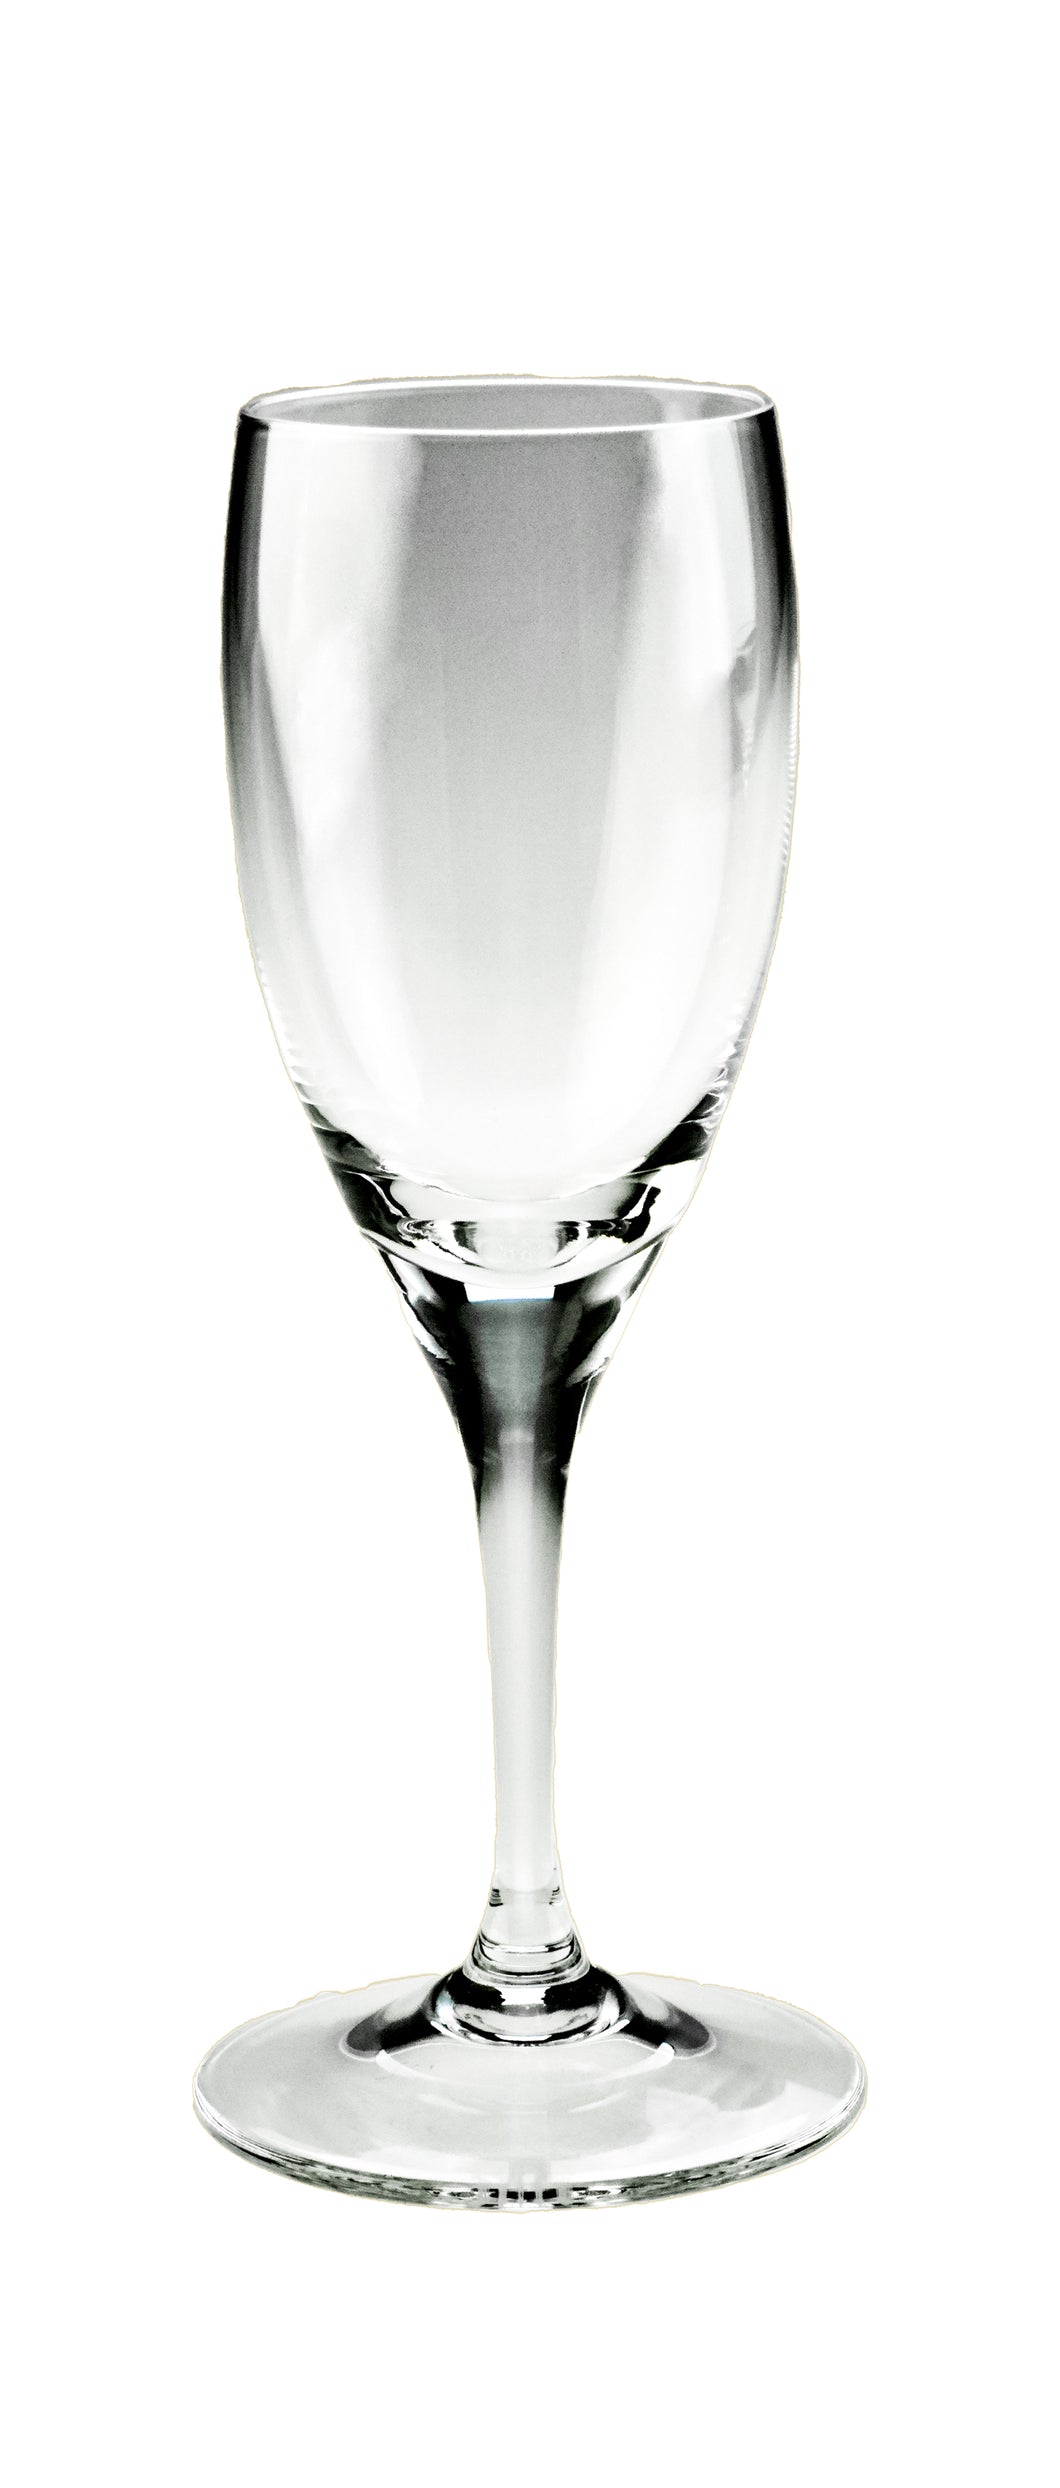 SONATE klar, glatt - Sherryglas 148 mm (Abverkauf)